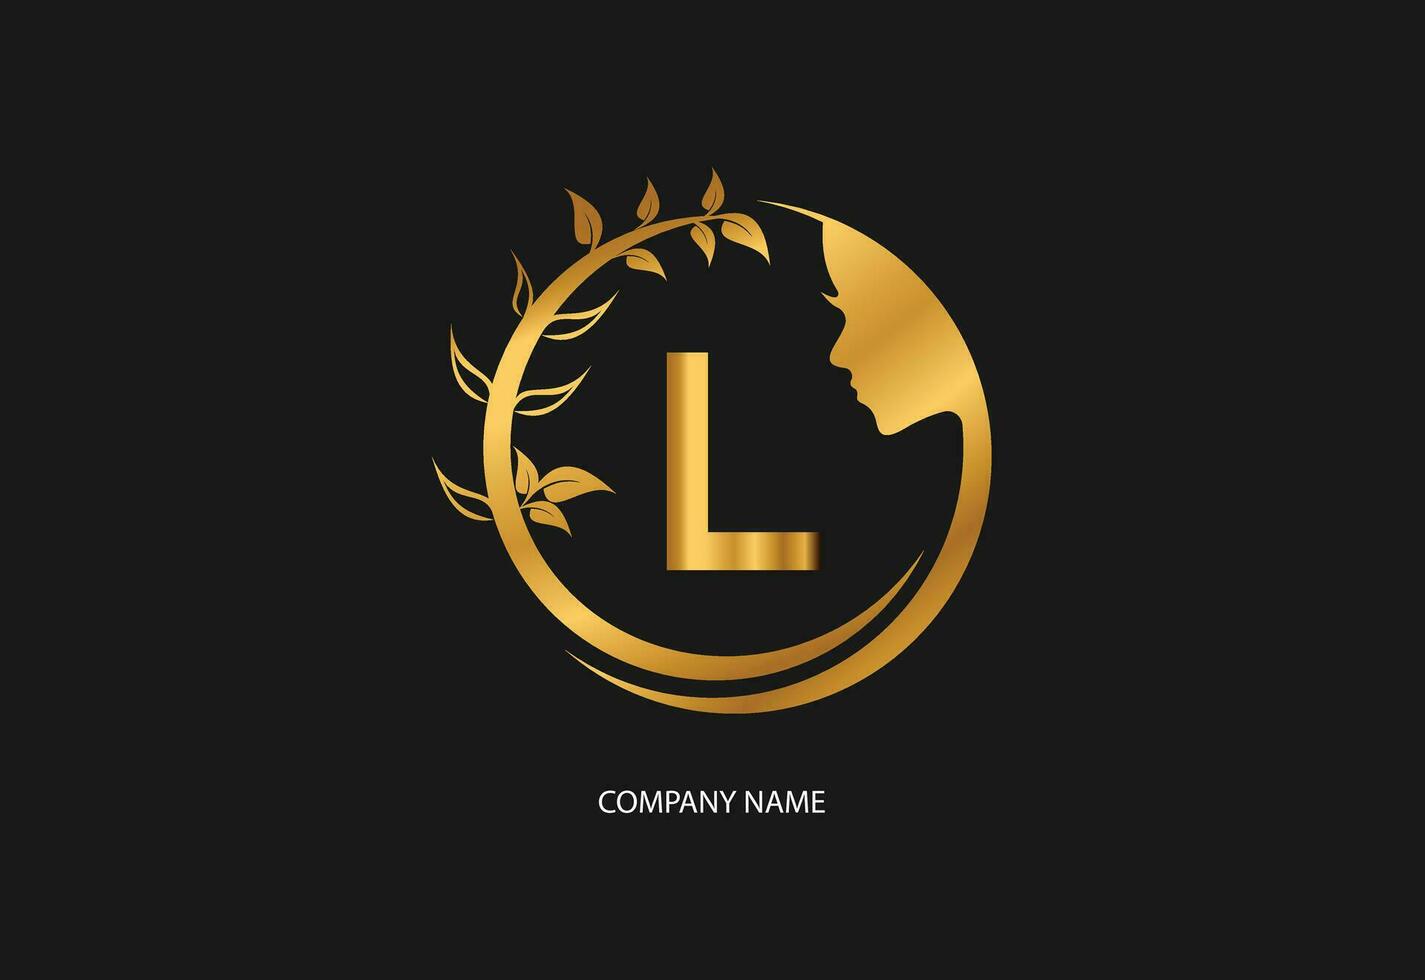 belleza logo inicial letra l con dorado estilo color y hoja. natural belleza logo modelo vector